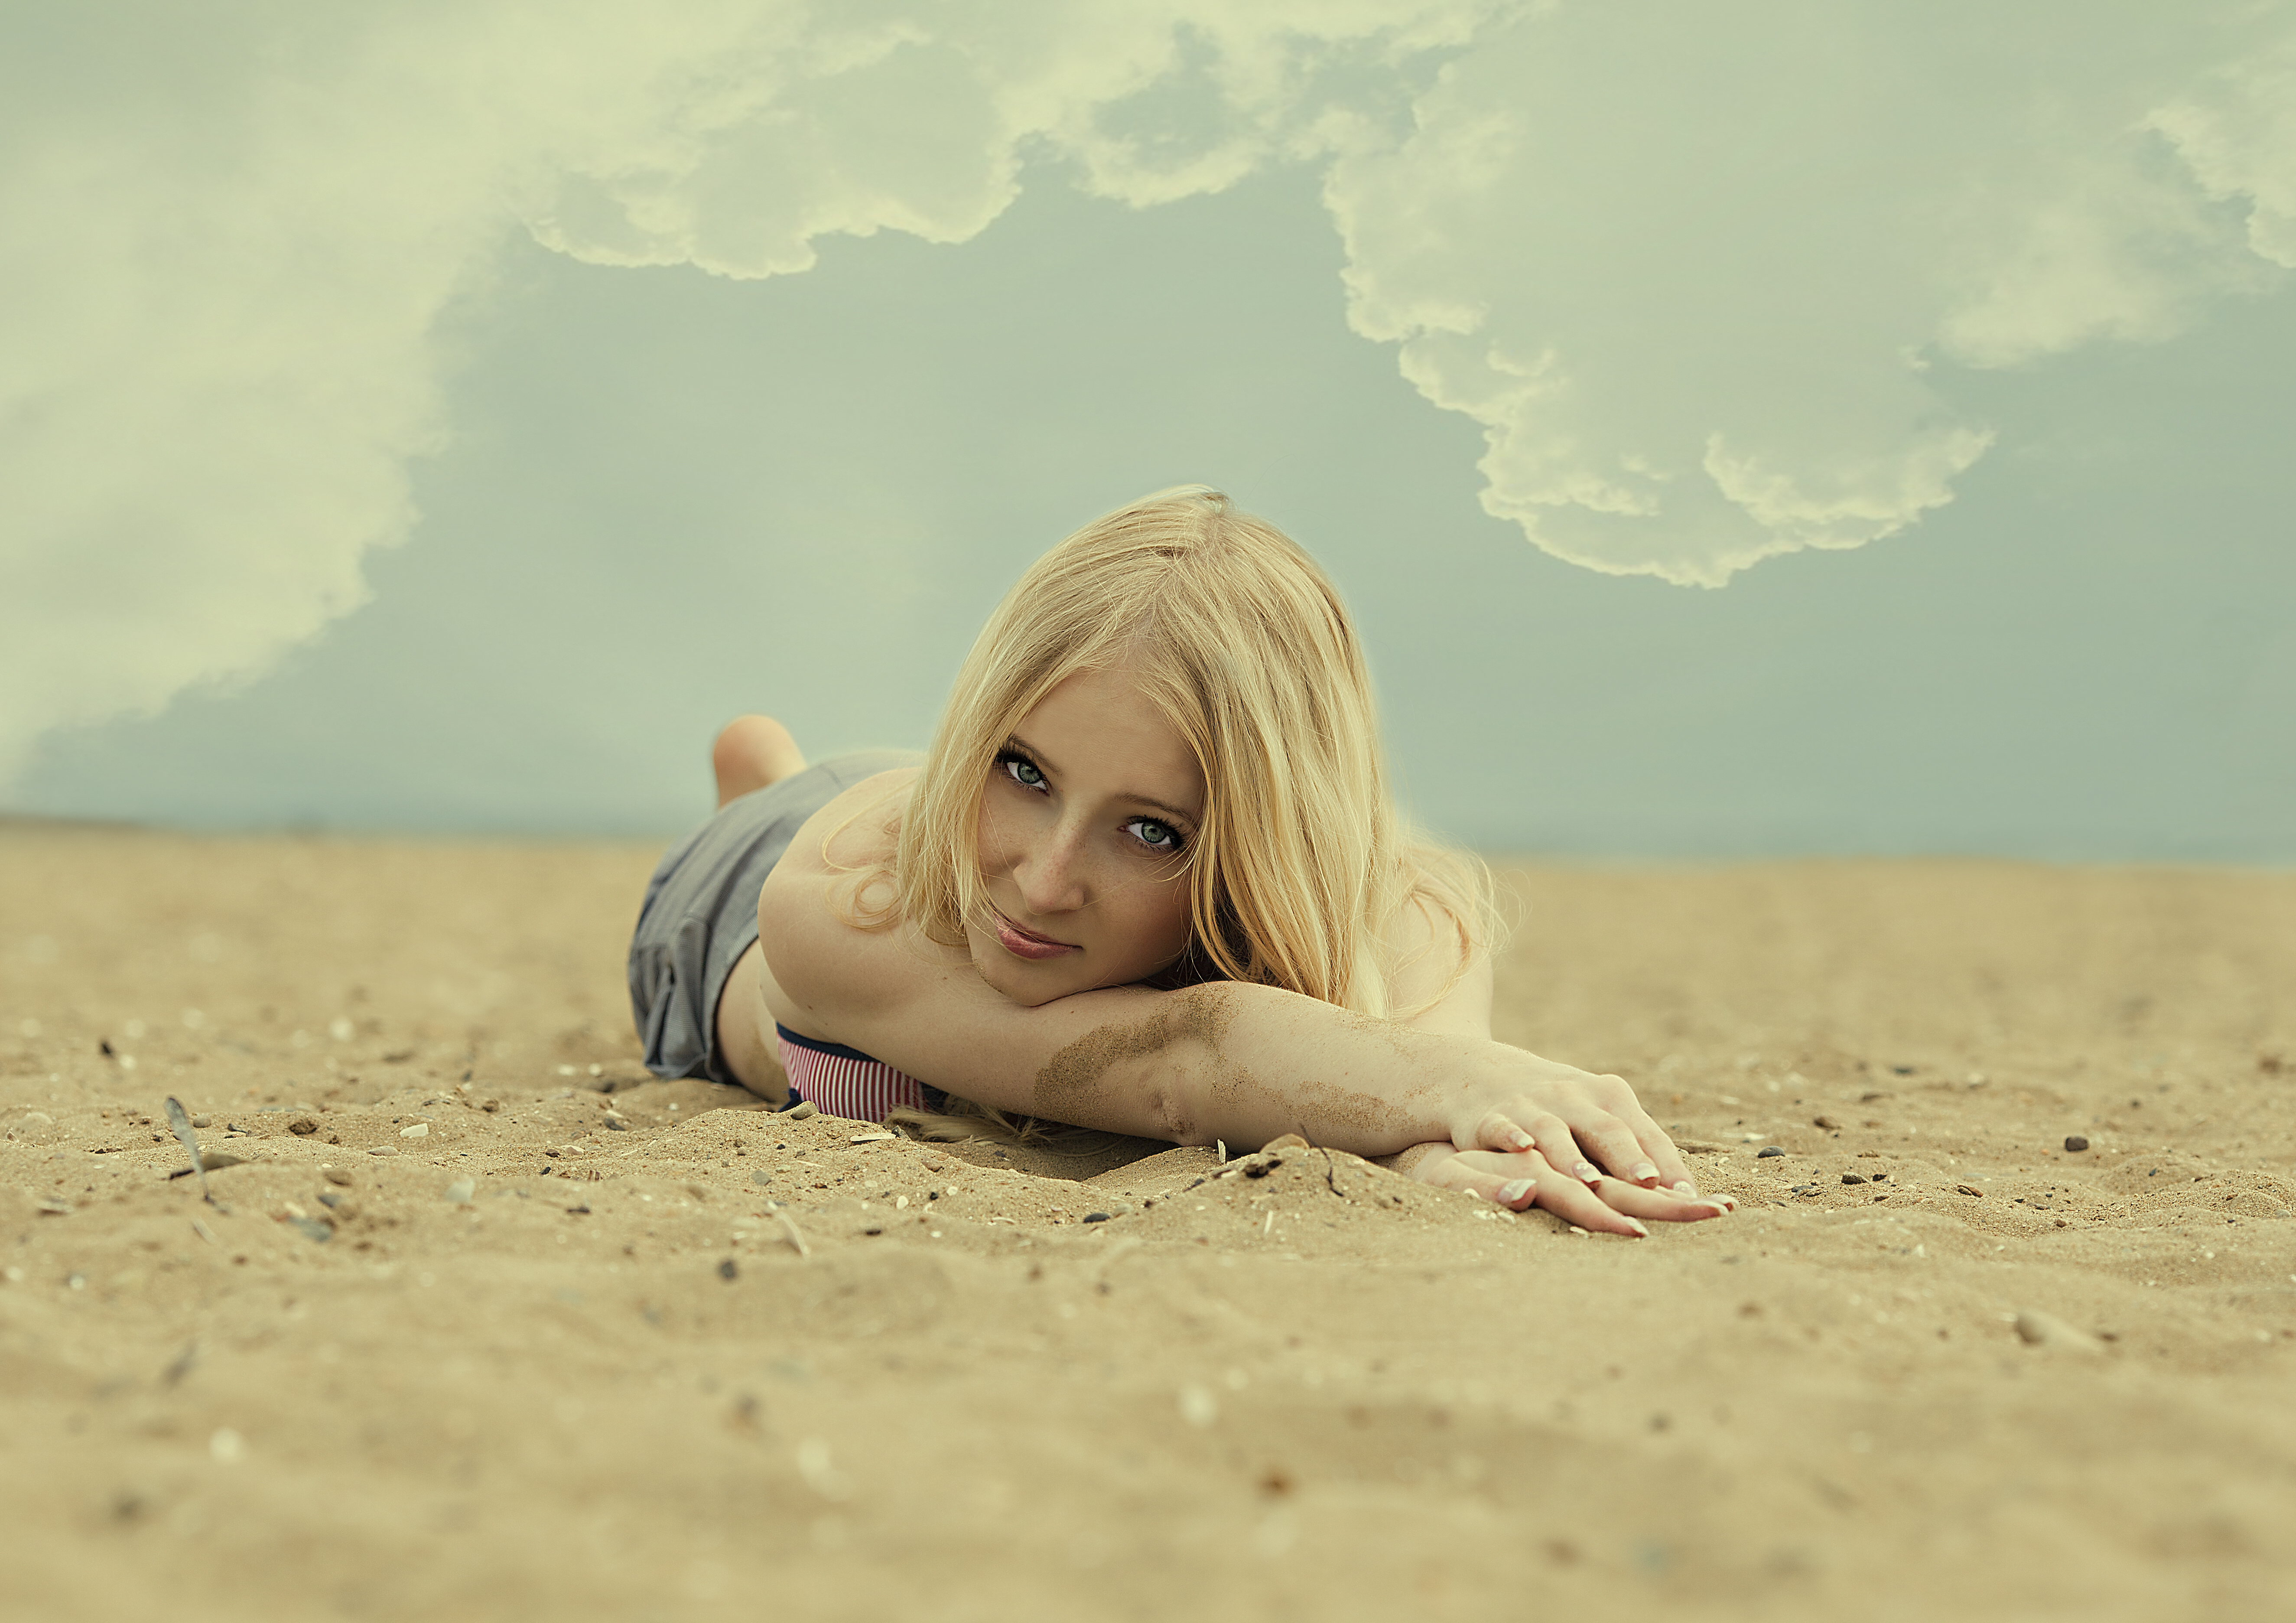 Dream blonde. Девушка блондинка. Девушка на песке. Девушка пляж песок. Девушка на пляже.